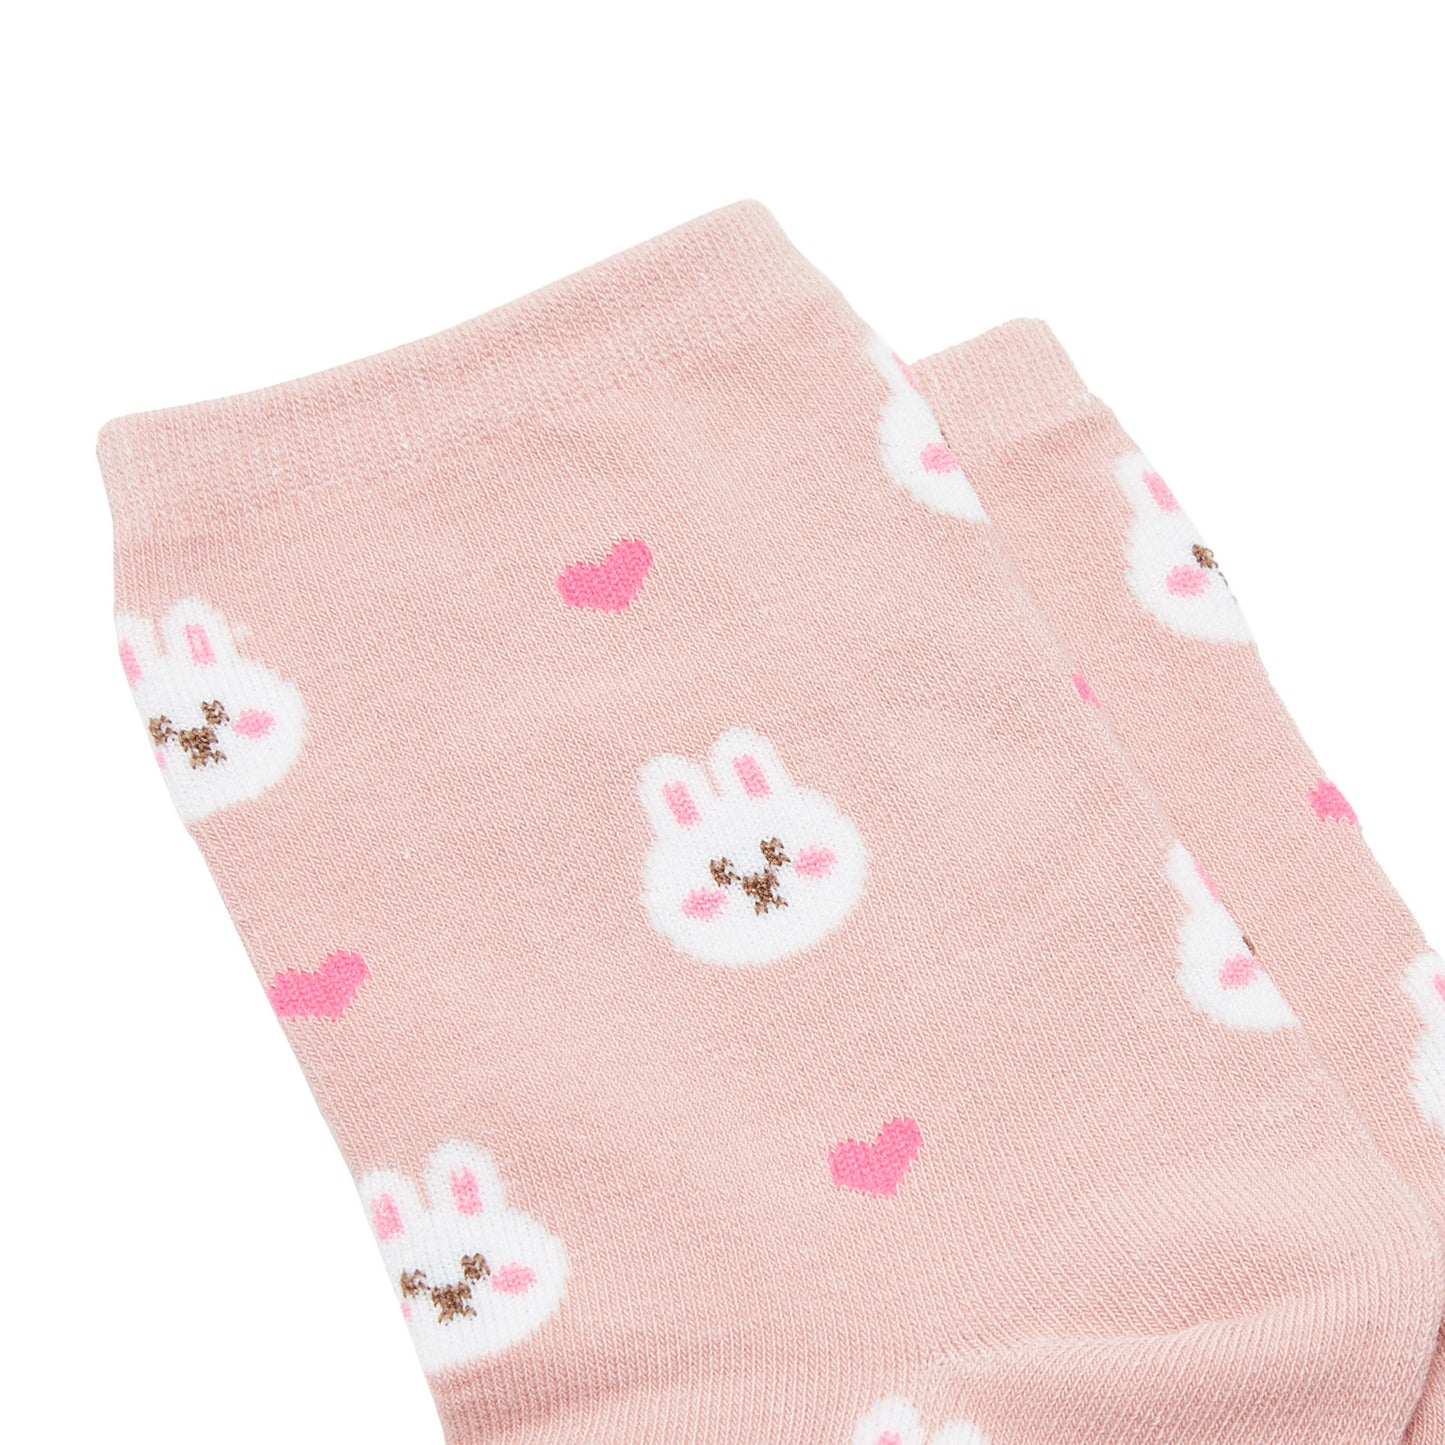 We Love Bears Printed Quarter Length Socks - IDENTITY Apparel Shop